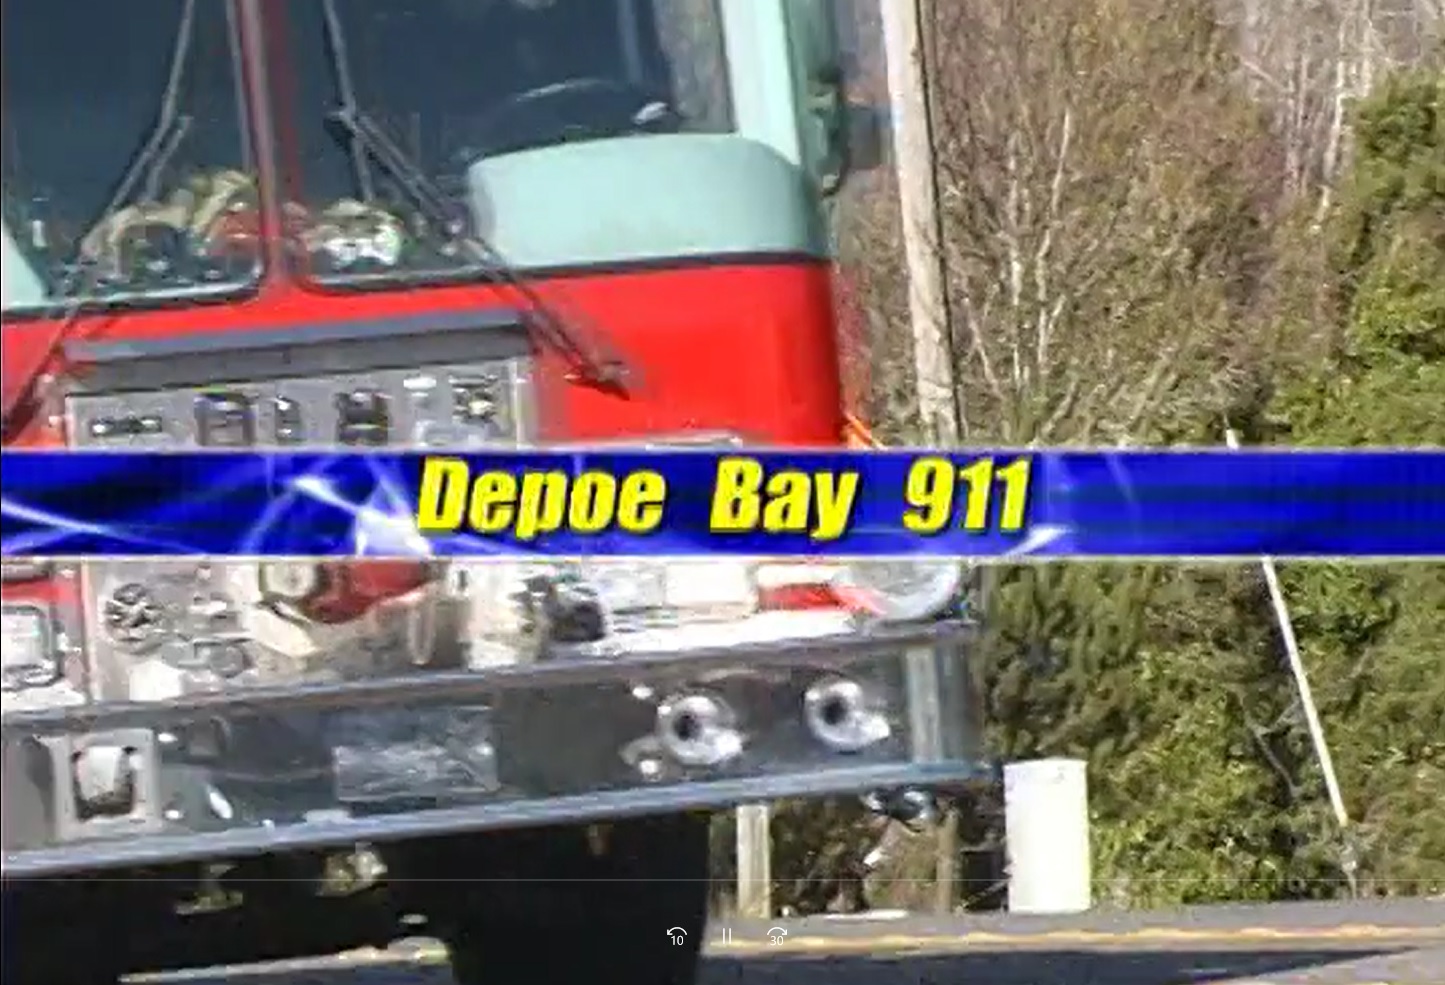 Depoe Bay 911